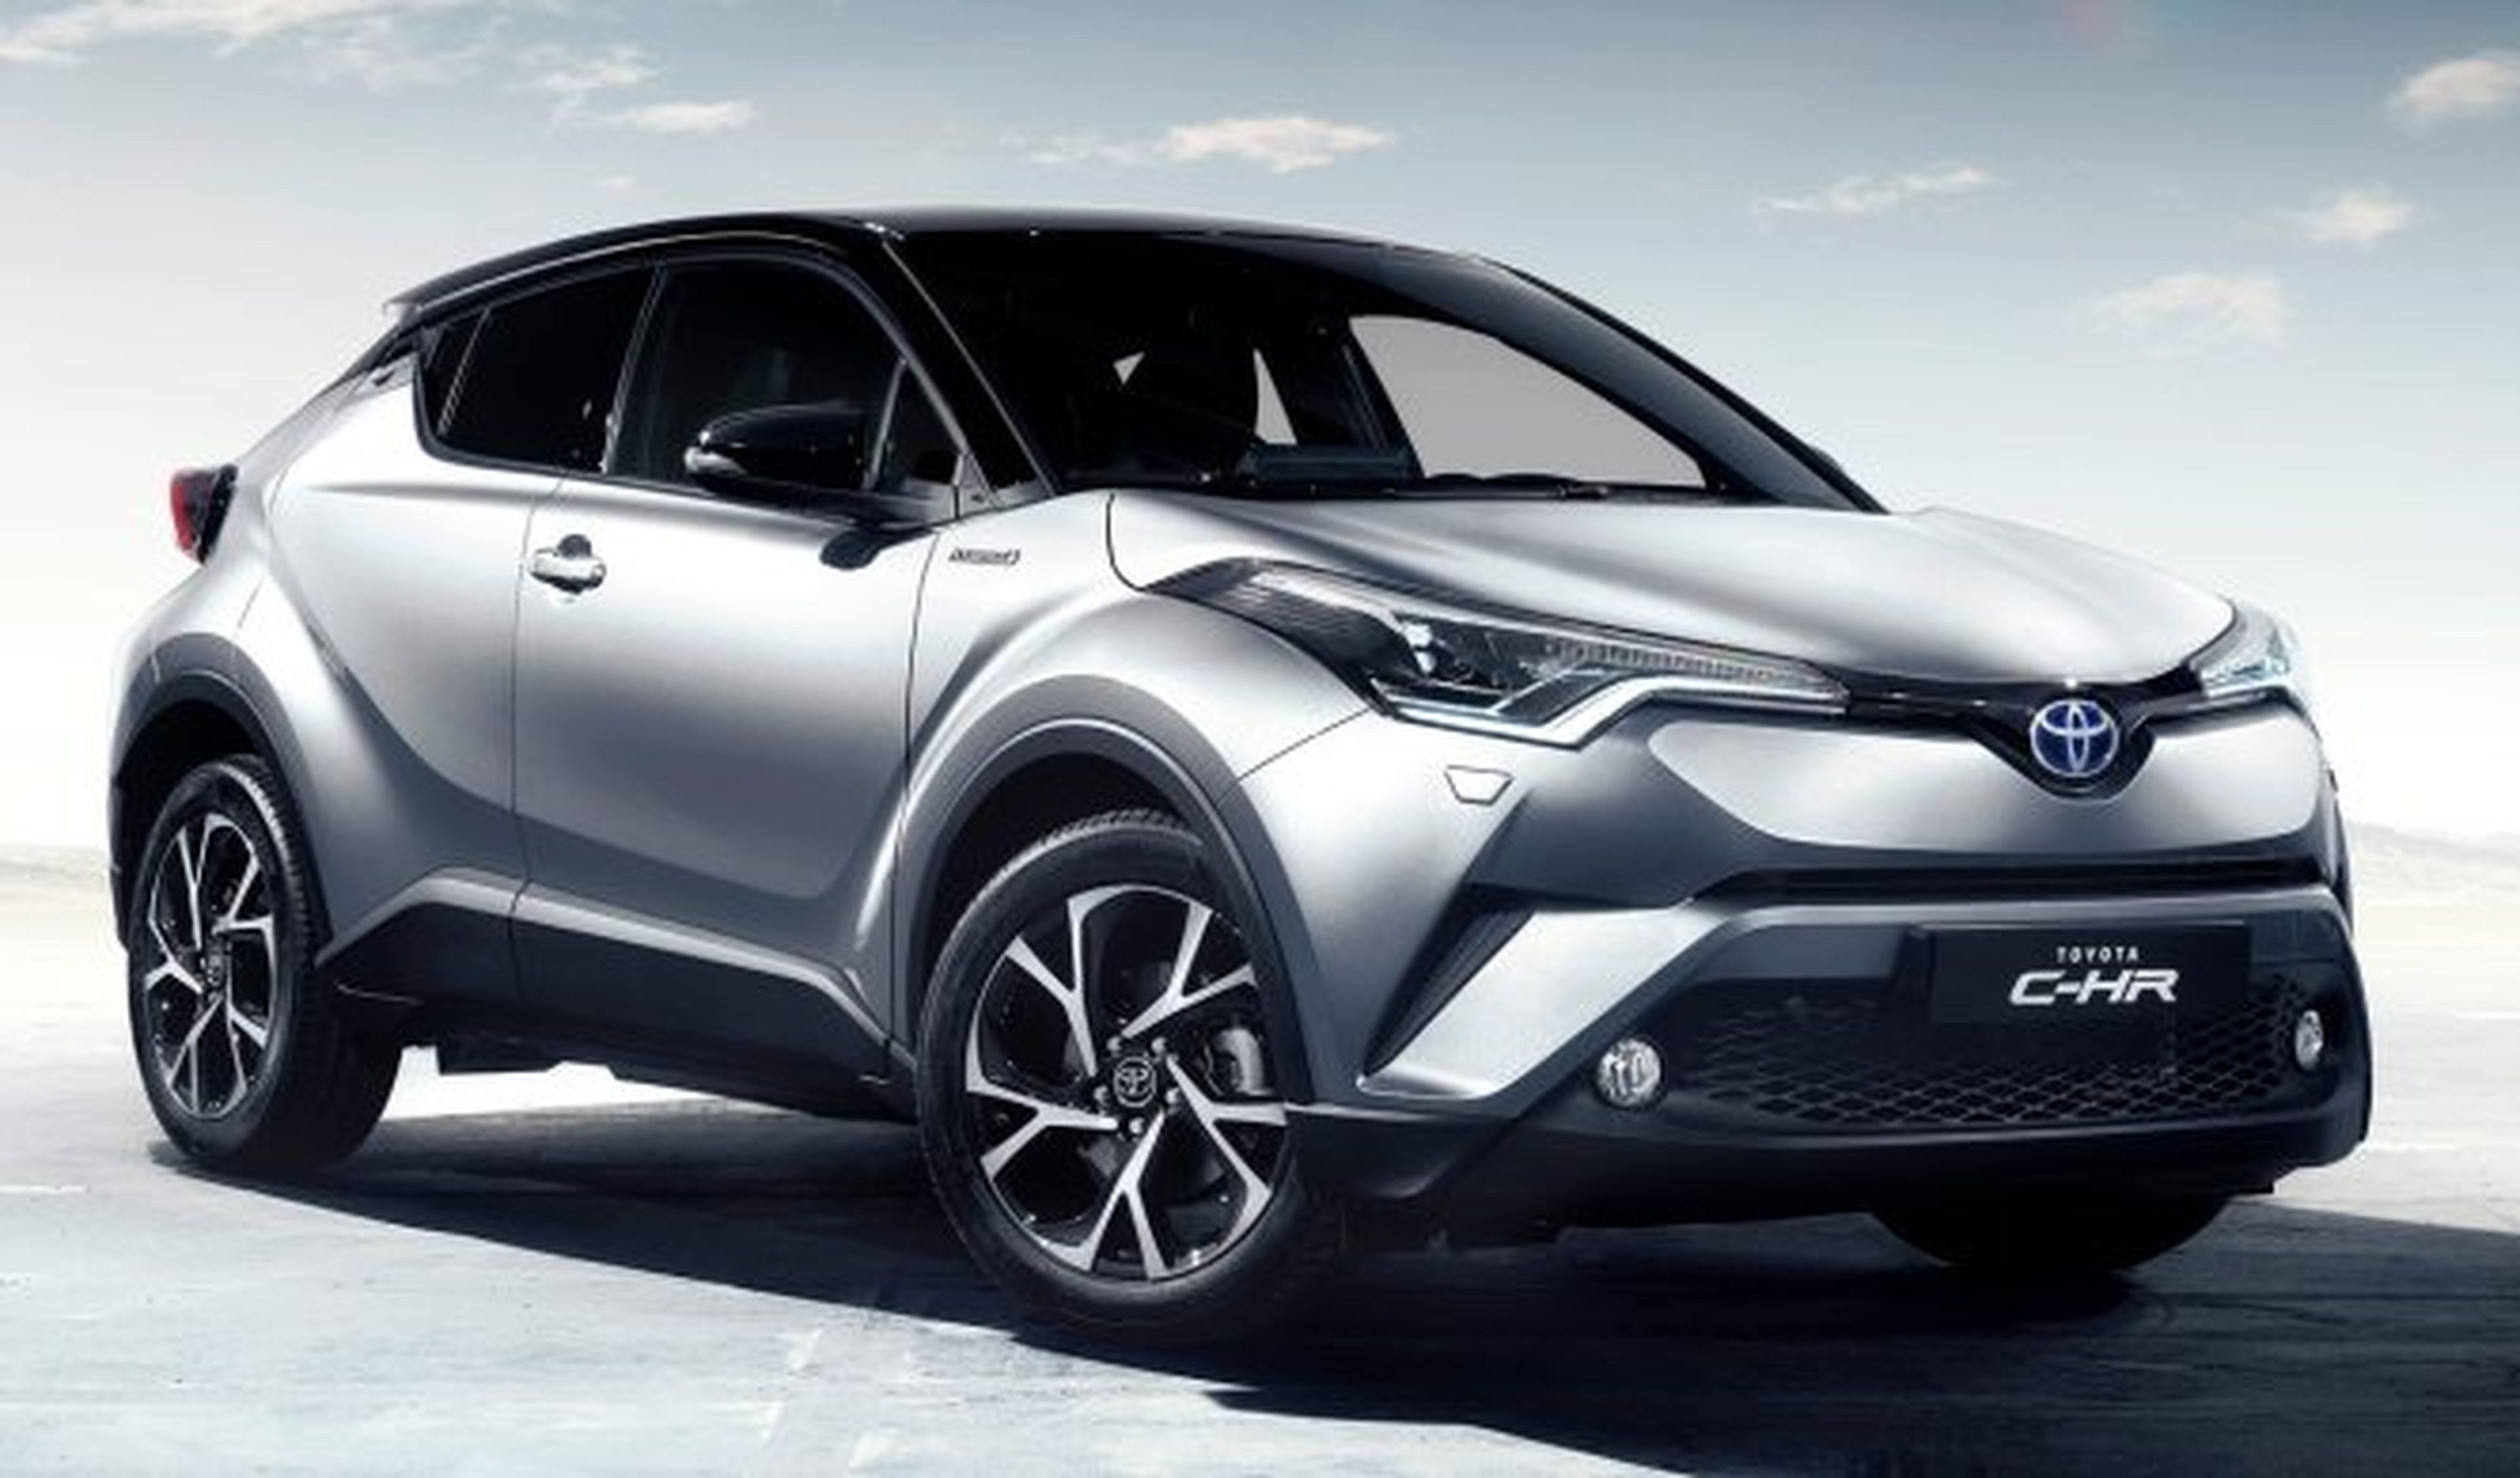 Toyota empieza a abandonar el diésel en Europa